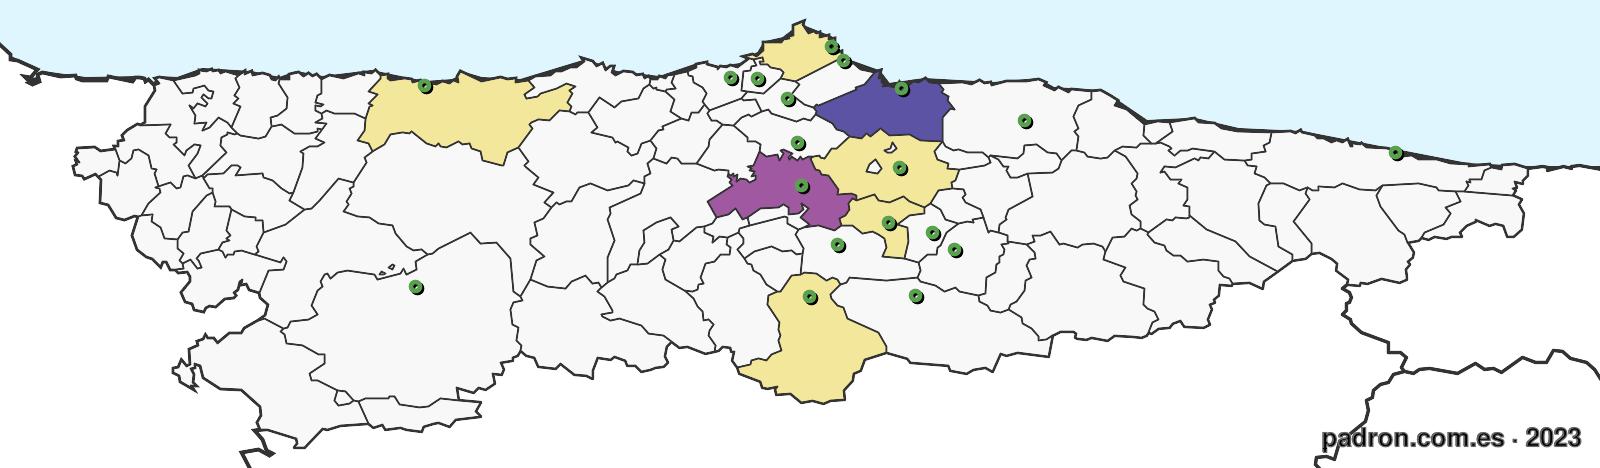 malienses en asturias.